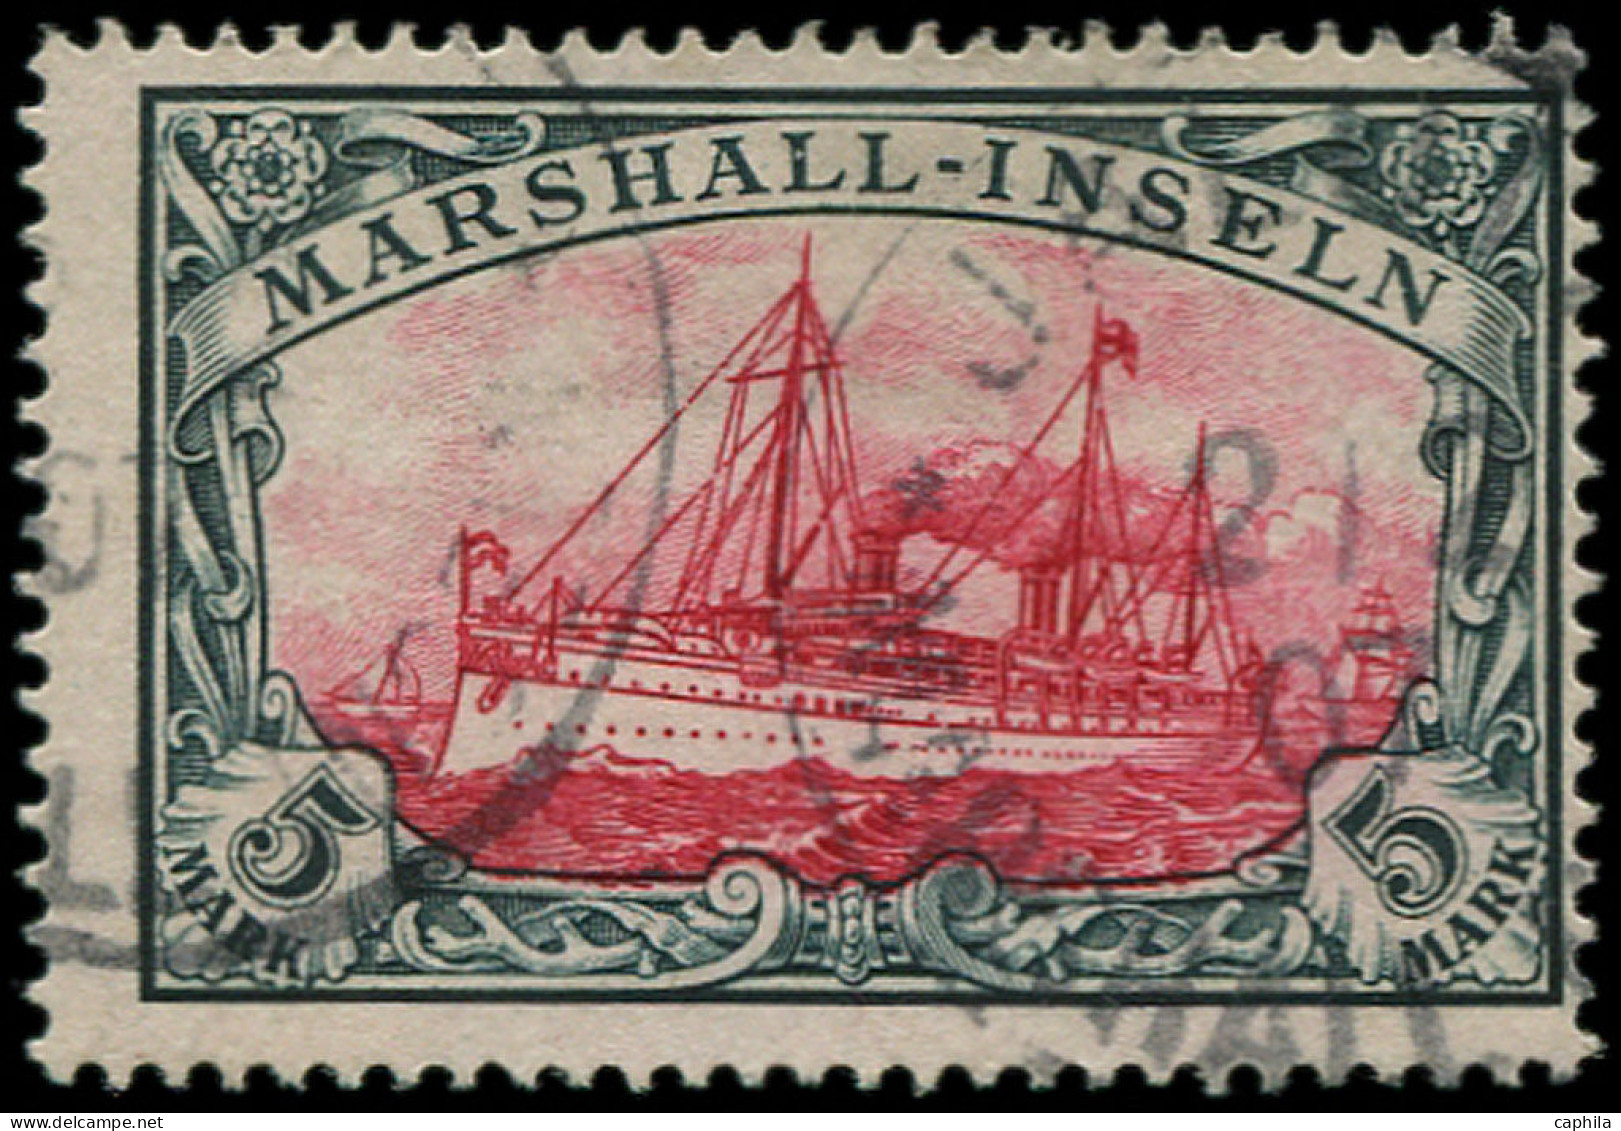 * MARSHALL - Poste - 25, Oblitération "Jaluit 2/2/07": 5m. Paquebot - Marshallinseln